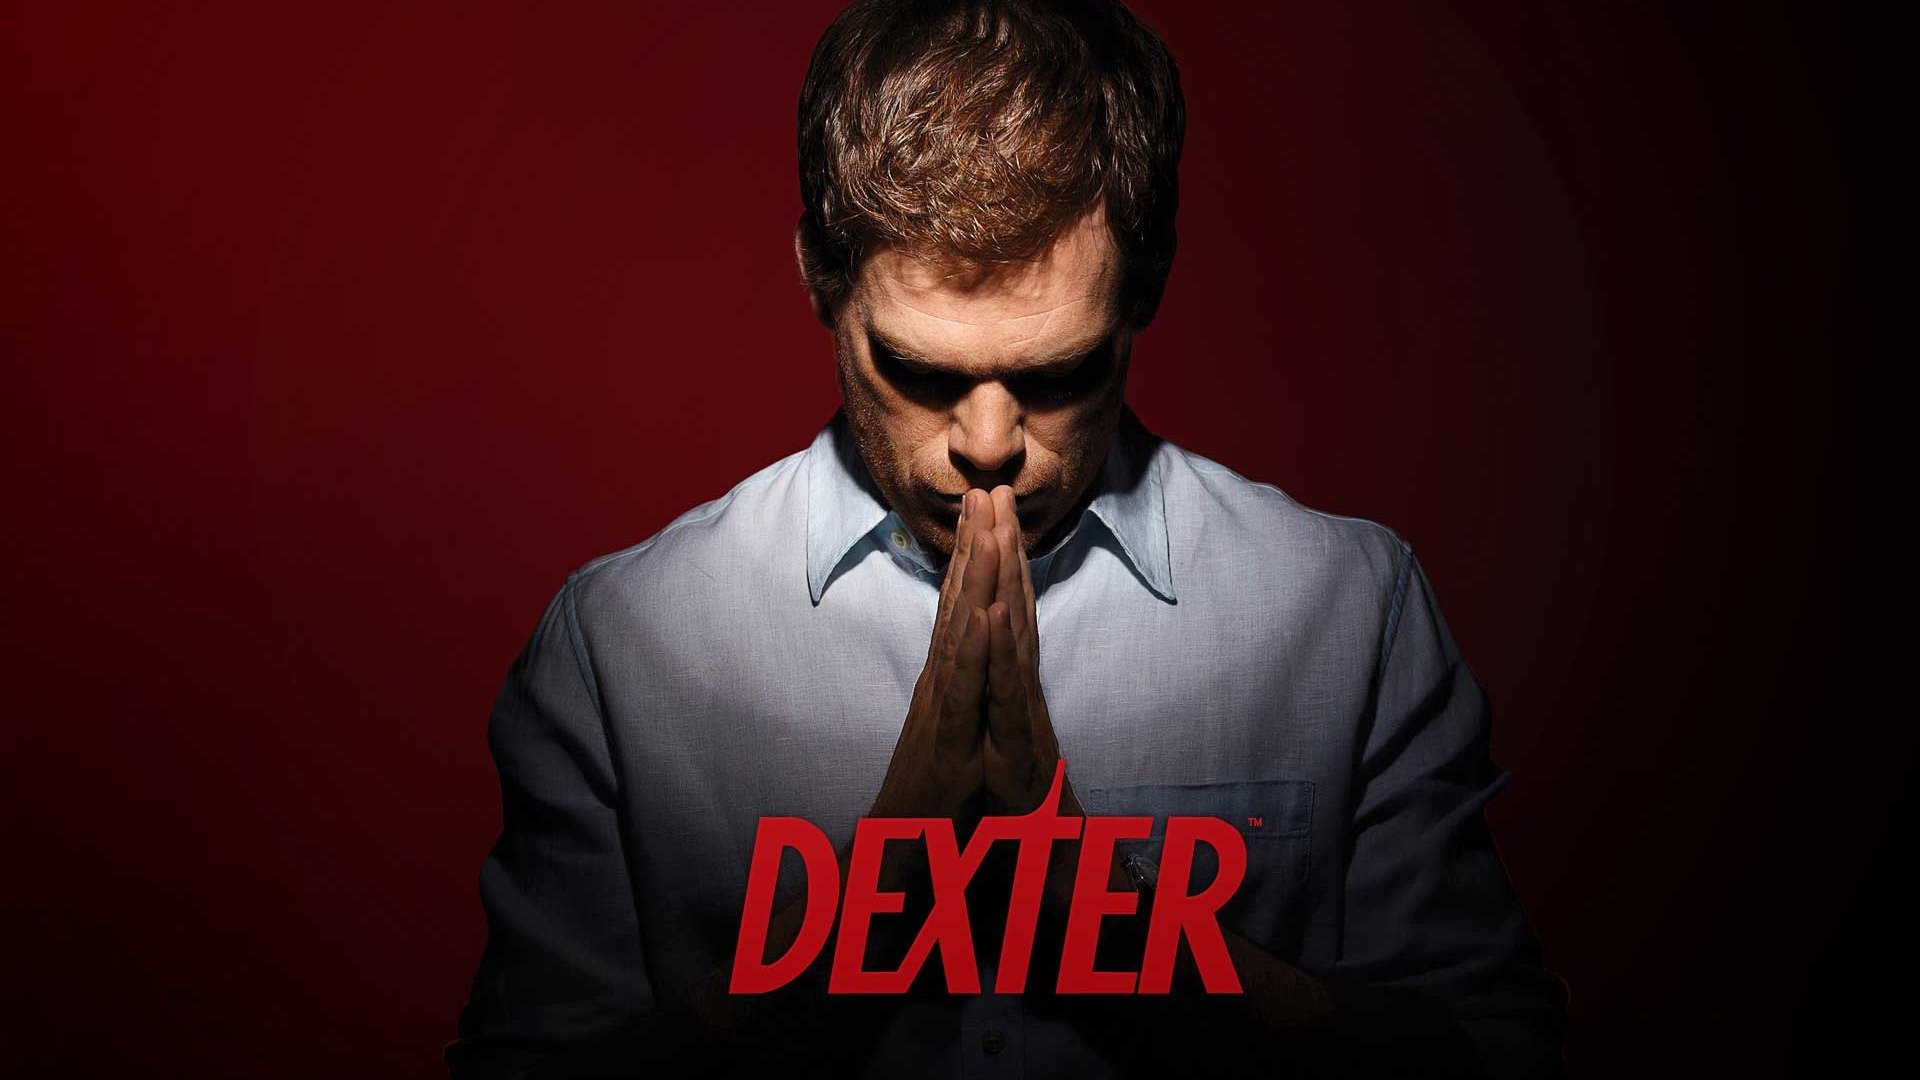 Awesome Dexter free wallpaper ID:275857 for hd 1080p desktop